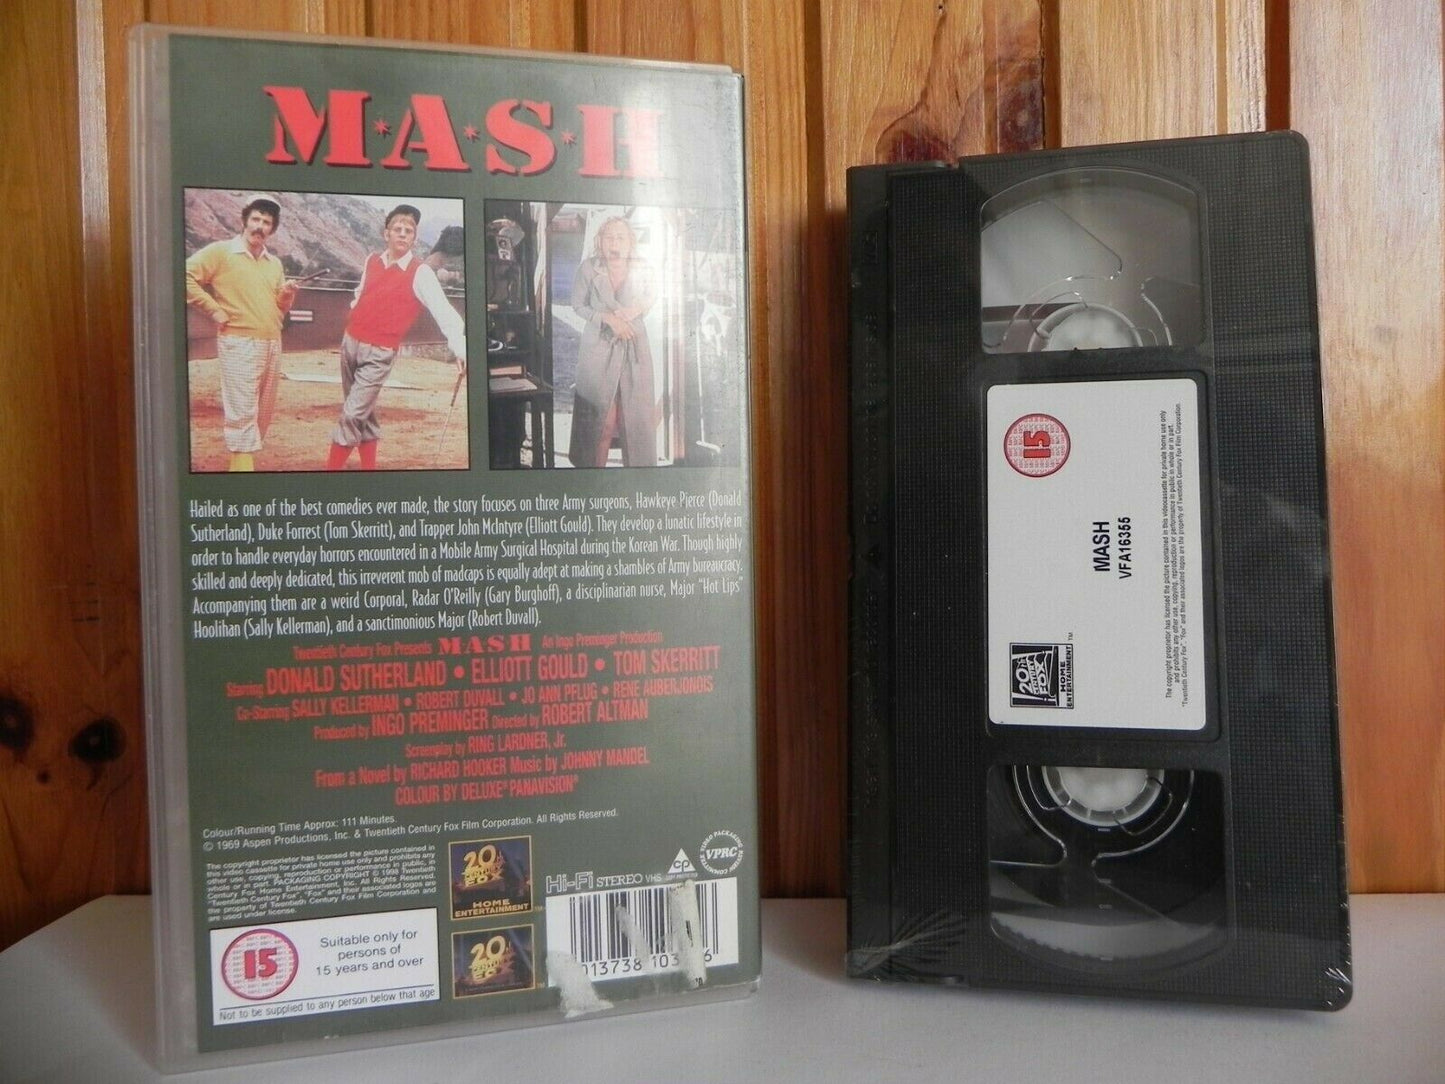 M*A*S*H* - War Classic - Comedy - Drama - Army - TV Show - Elliott Gould - VHS-